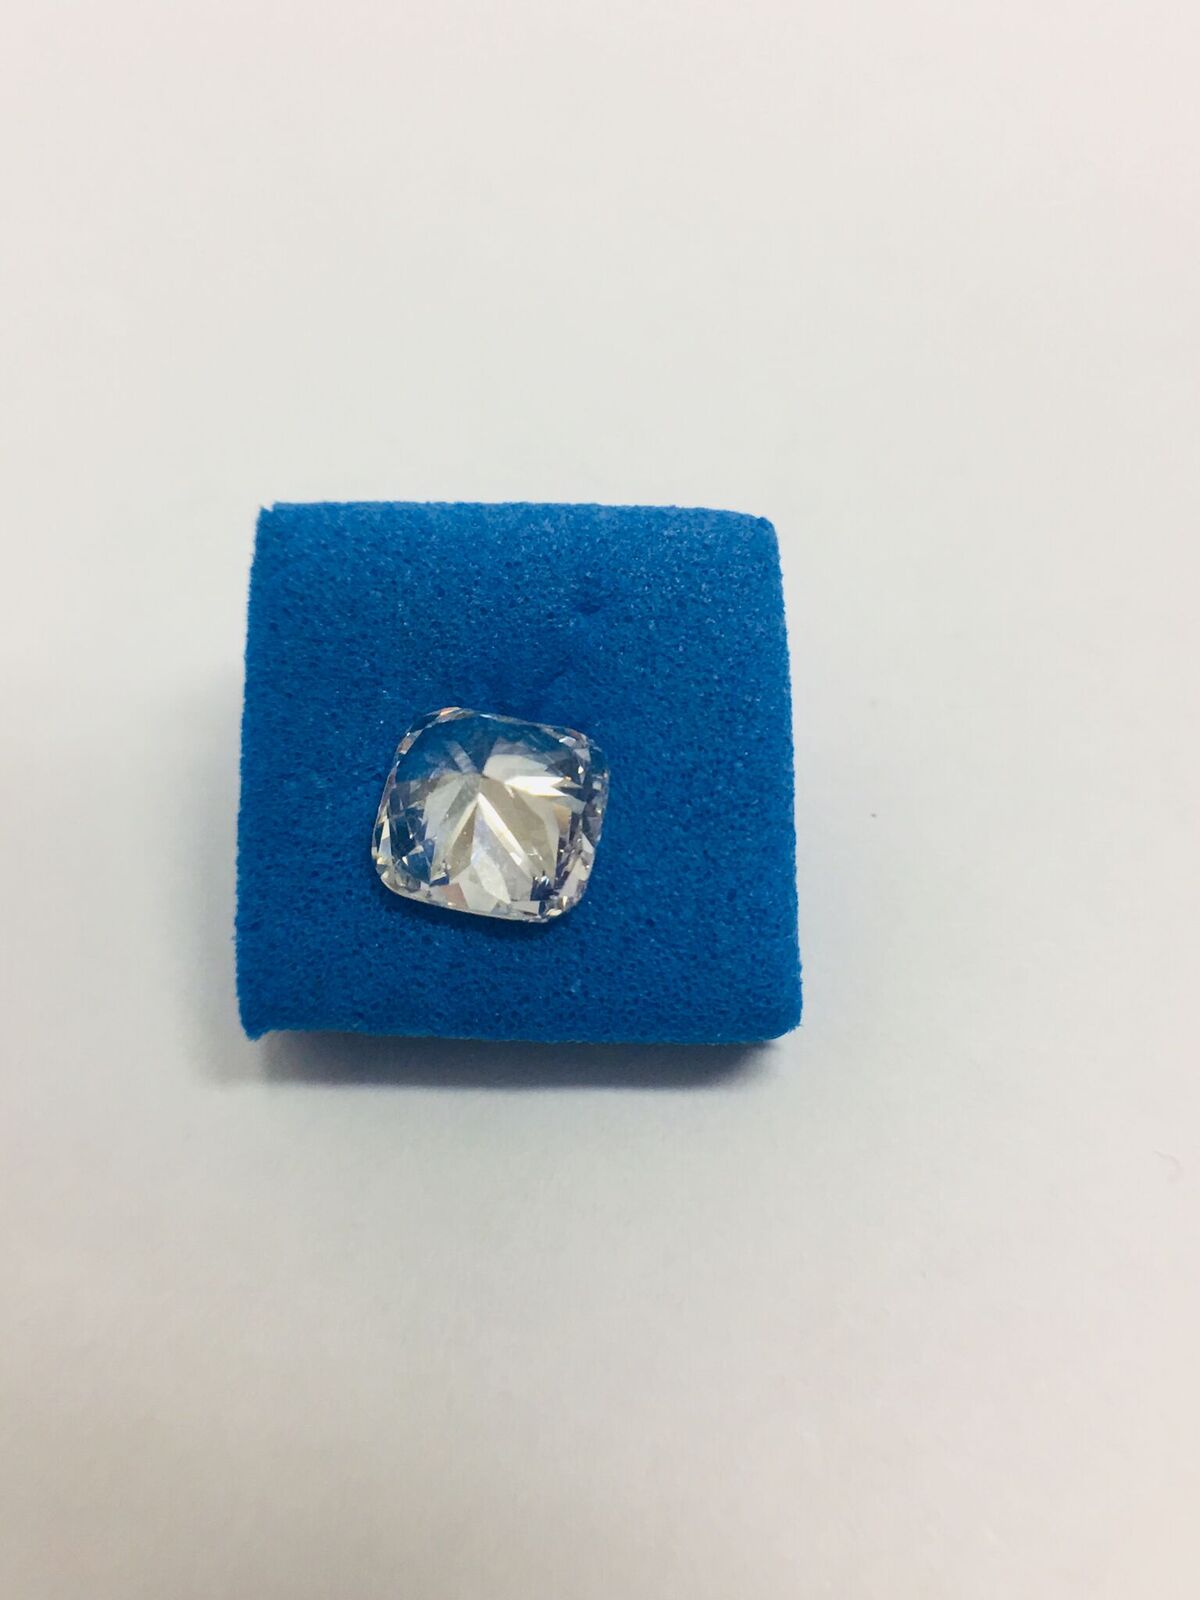 1.00ct cushion cut natural diamond - Image 12 of 14